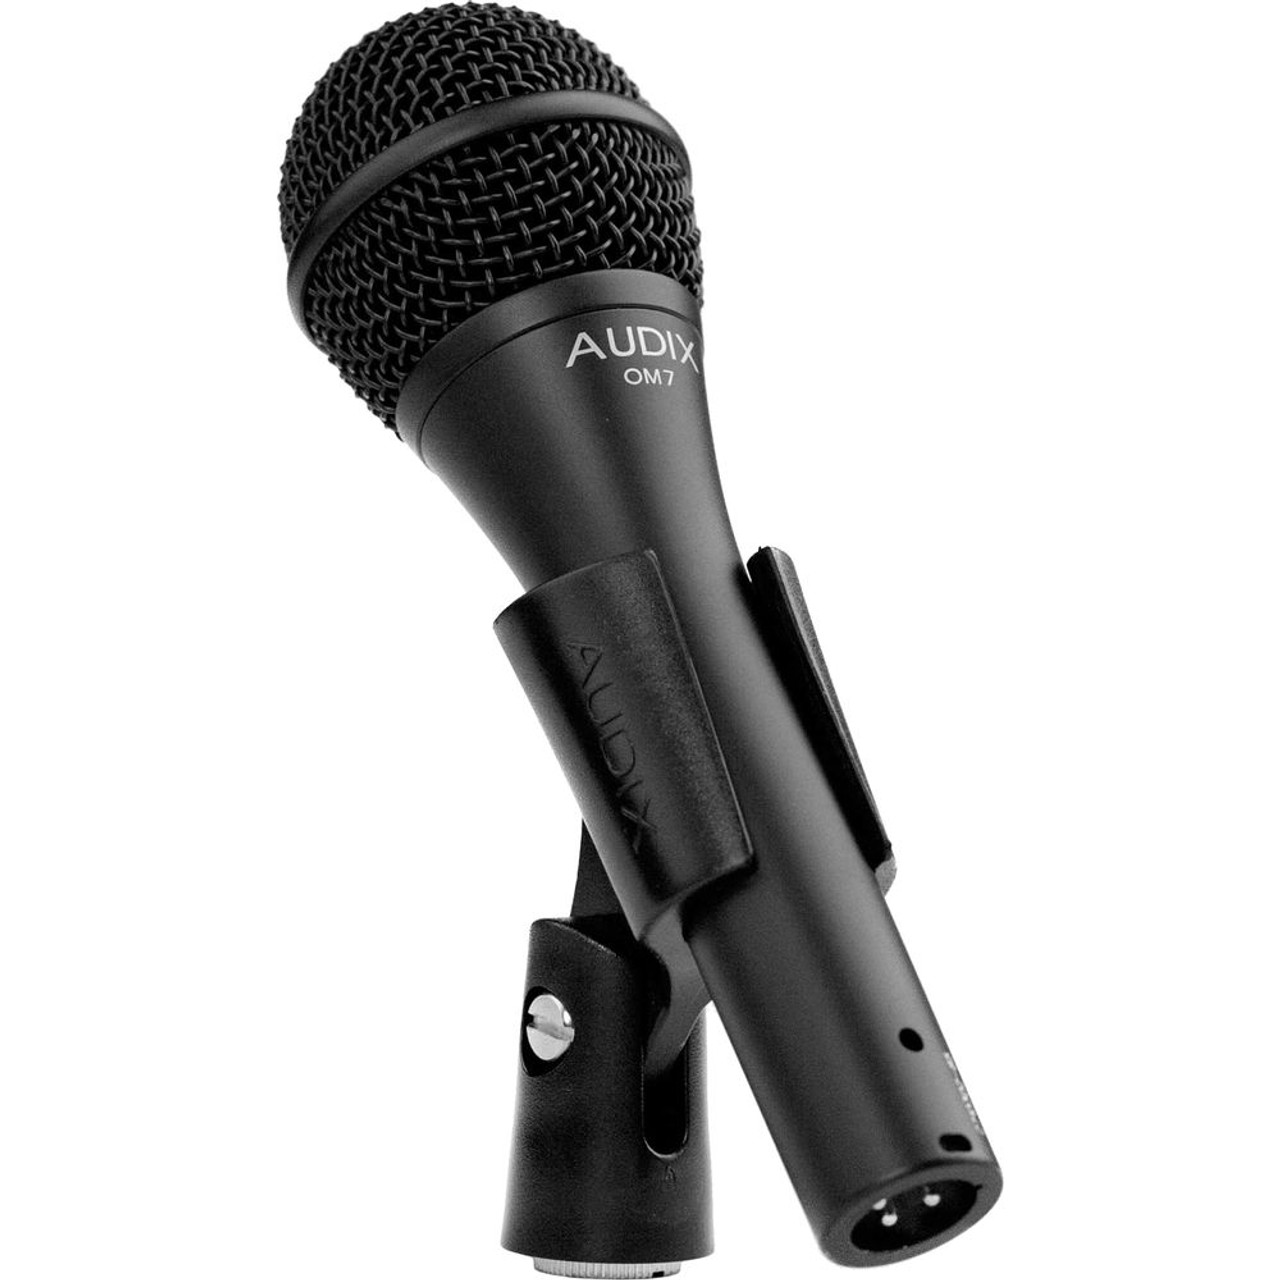 Audix OM7 Handheld Dynamic Microphone | FrontEndAudio.com